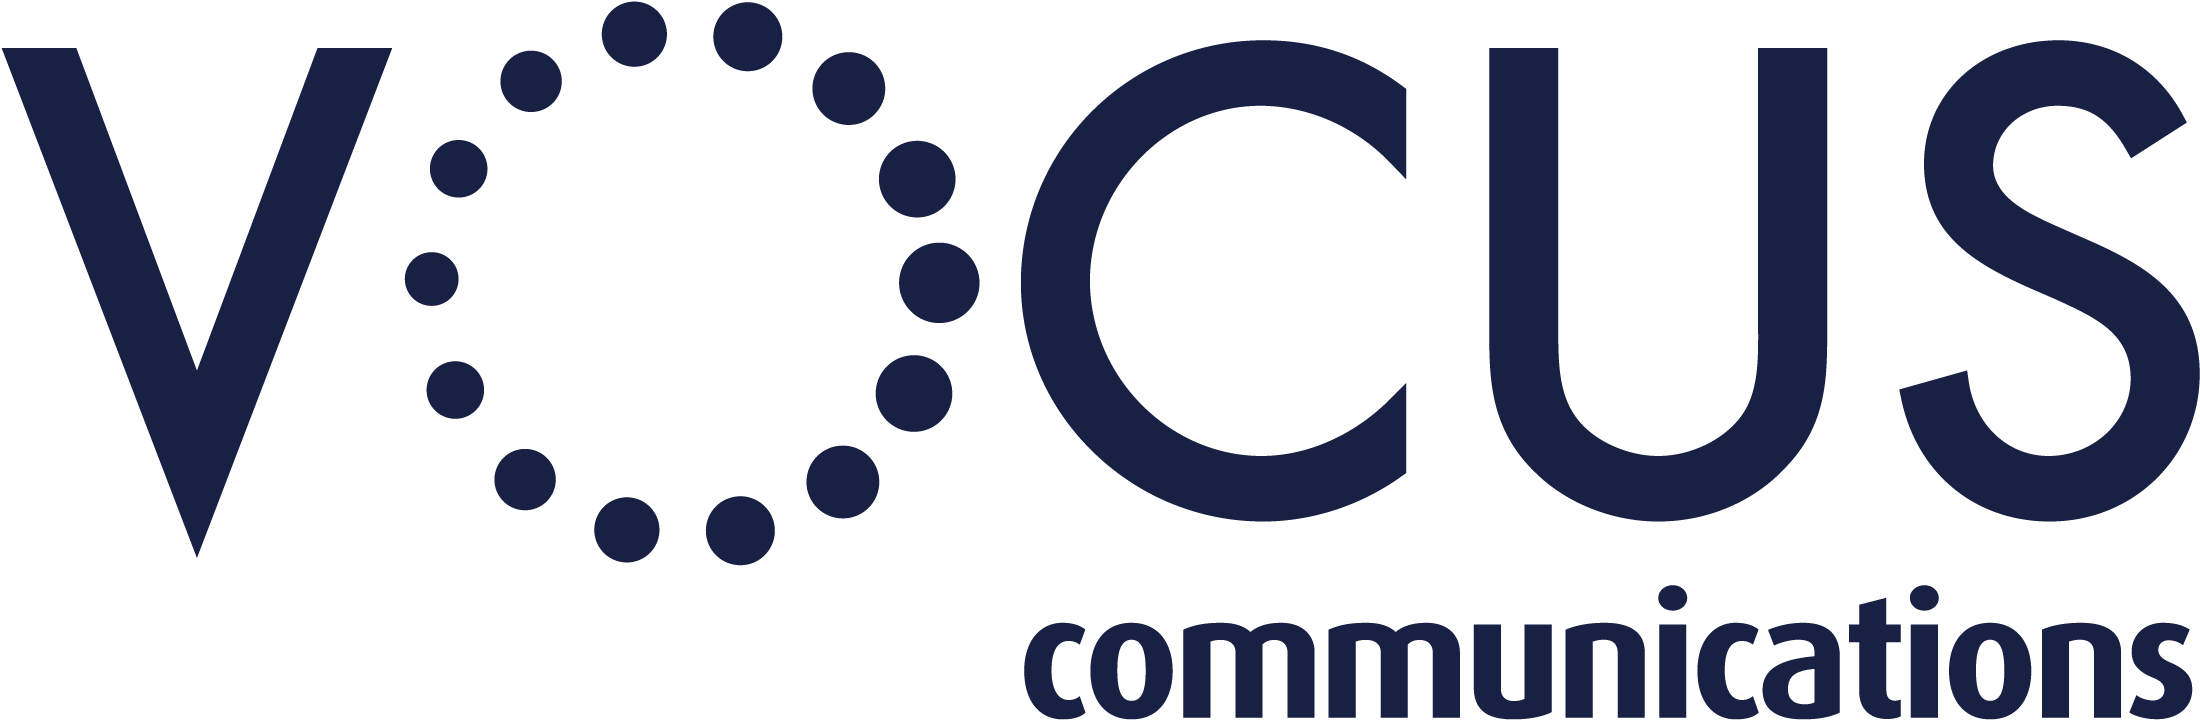 Great Work Team - Vocus Communications Logo (2400x980), Png Download